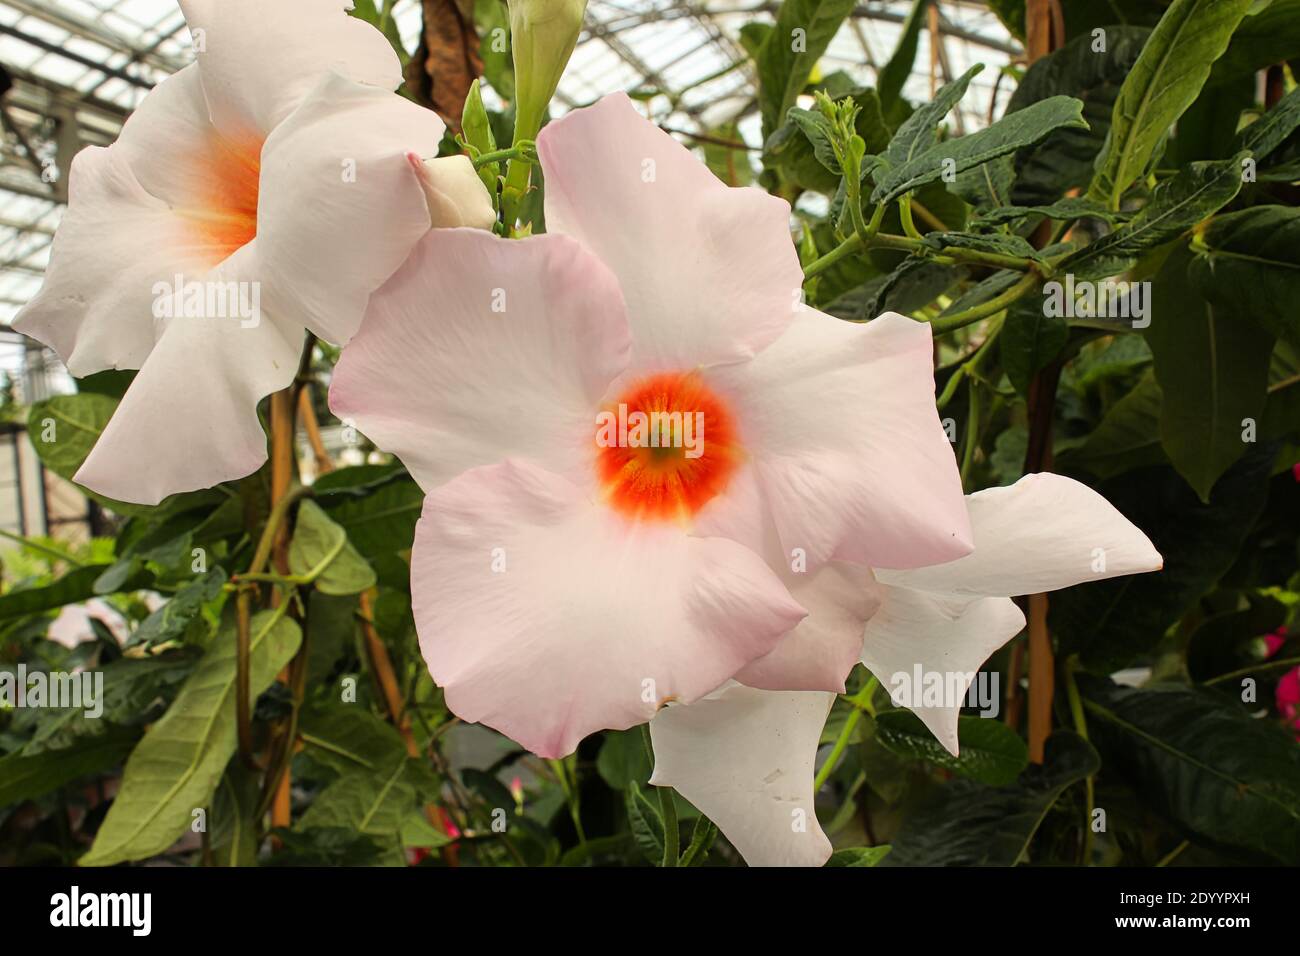 A blush mandevilla blossom with an orange center. Stock Photo